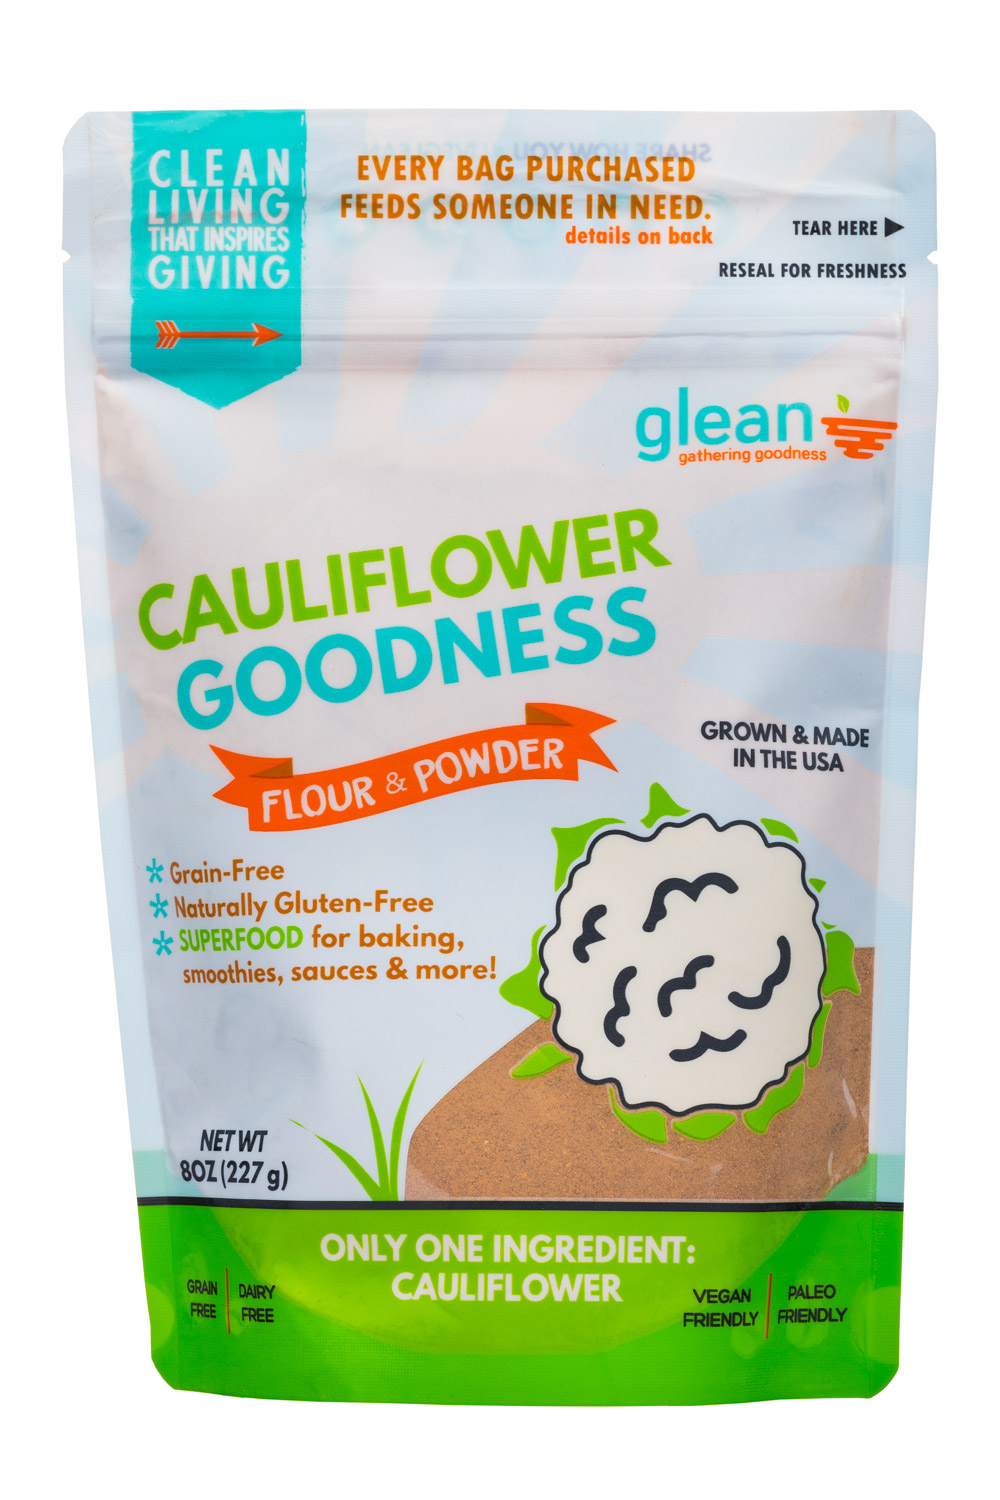 Cauliflower Goodness Flour & Powder